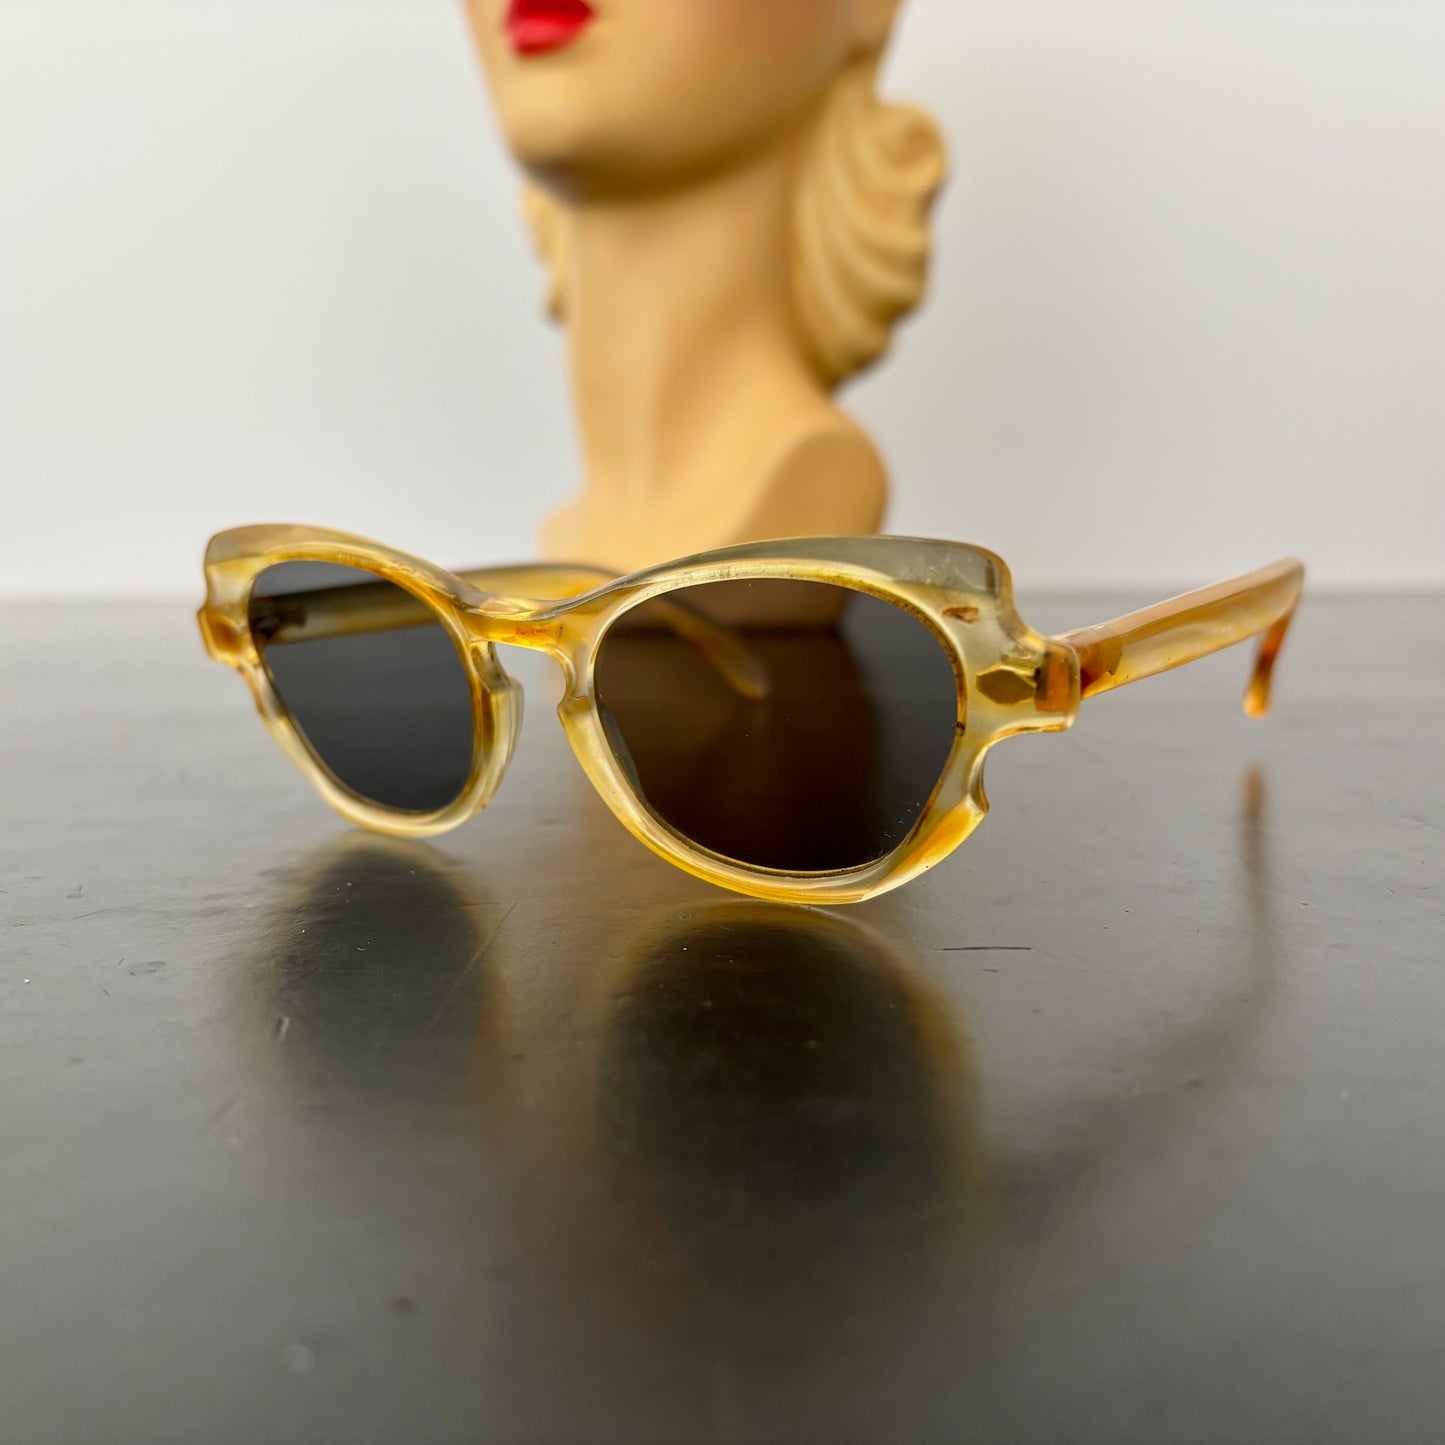 1940s/50s Vintage Sunglasses